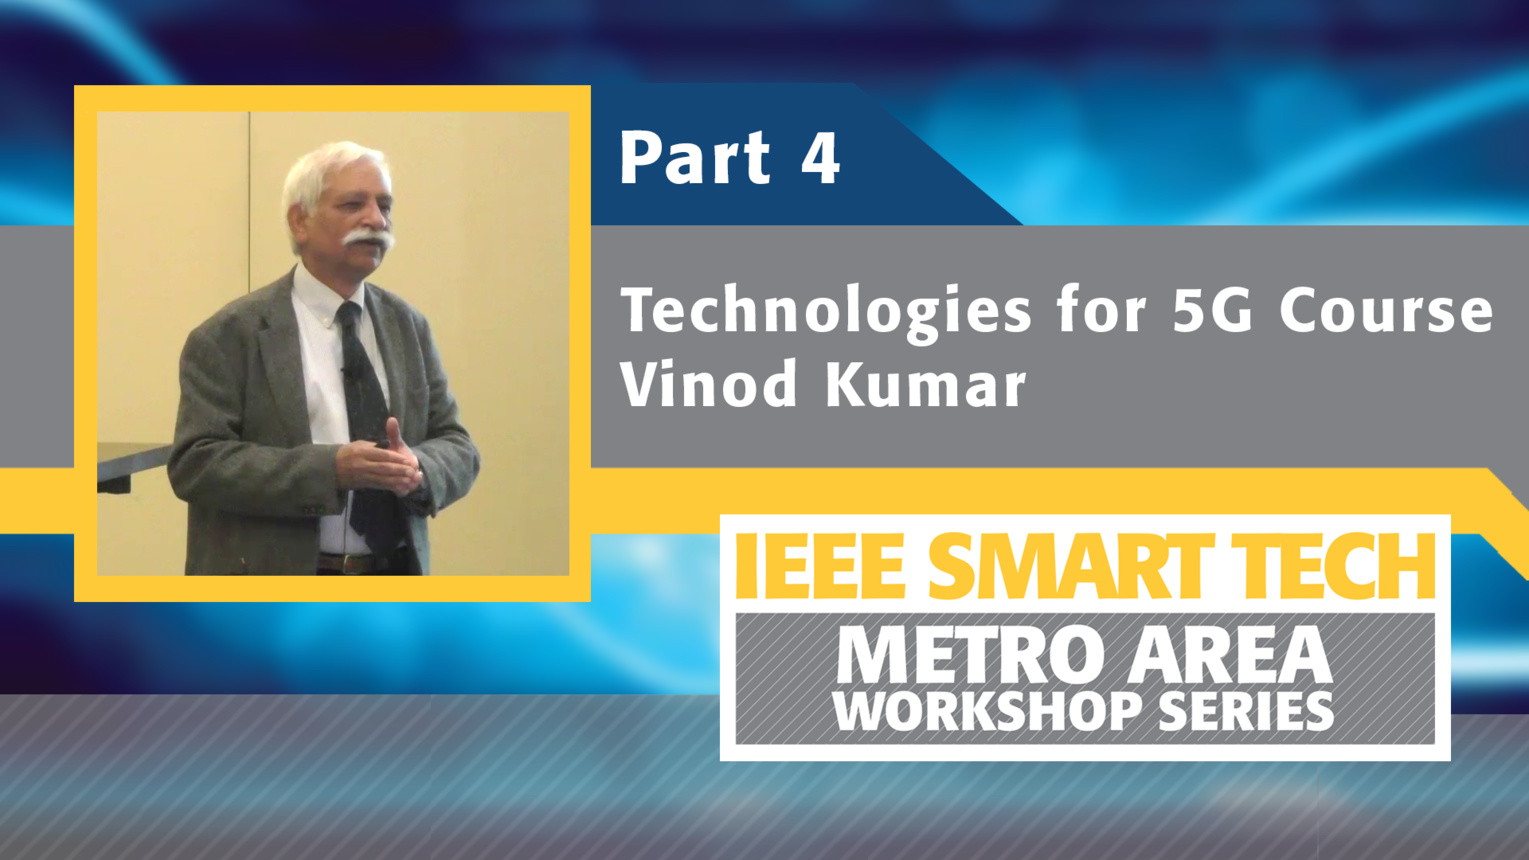 Technologies for 5G course, Part 4 - IEEE Smart Tech Workshop